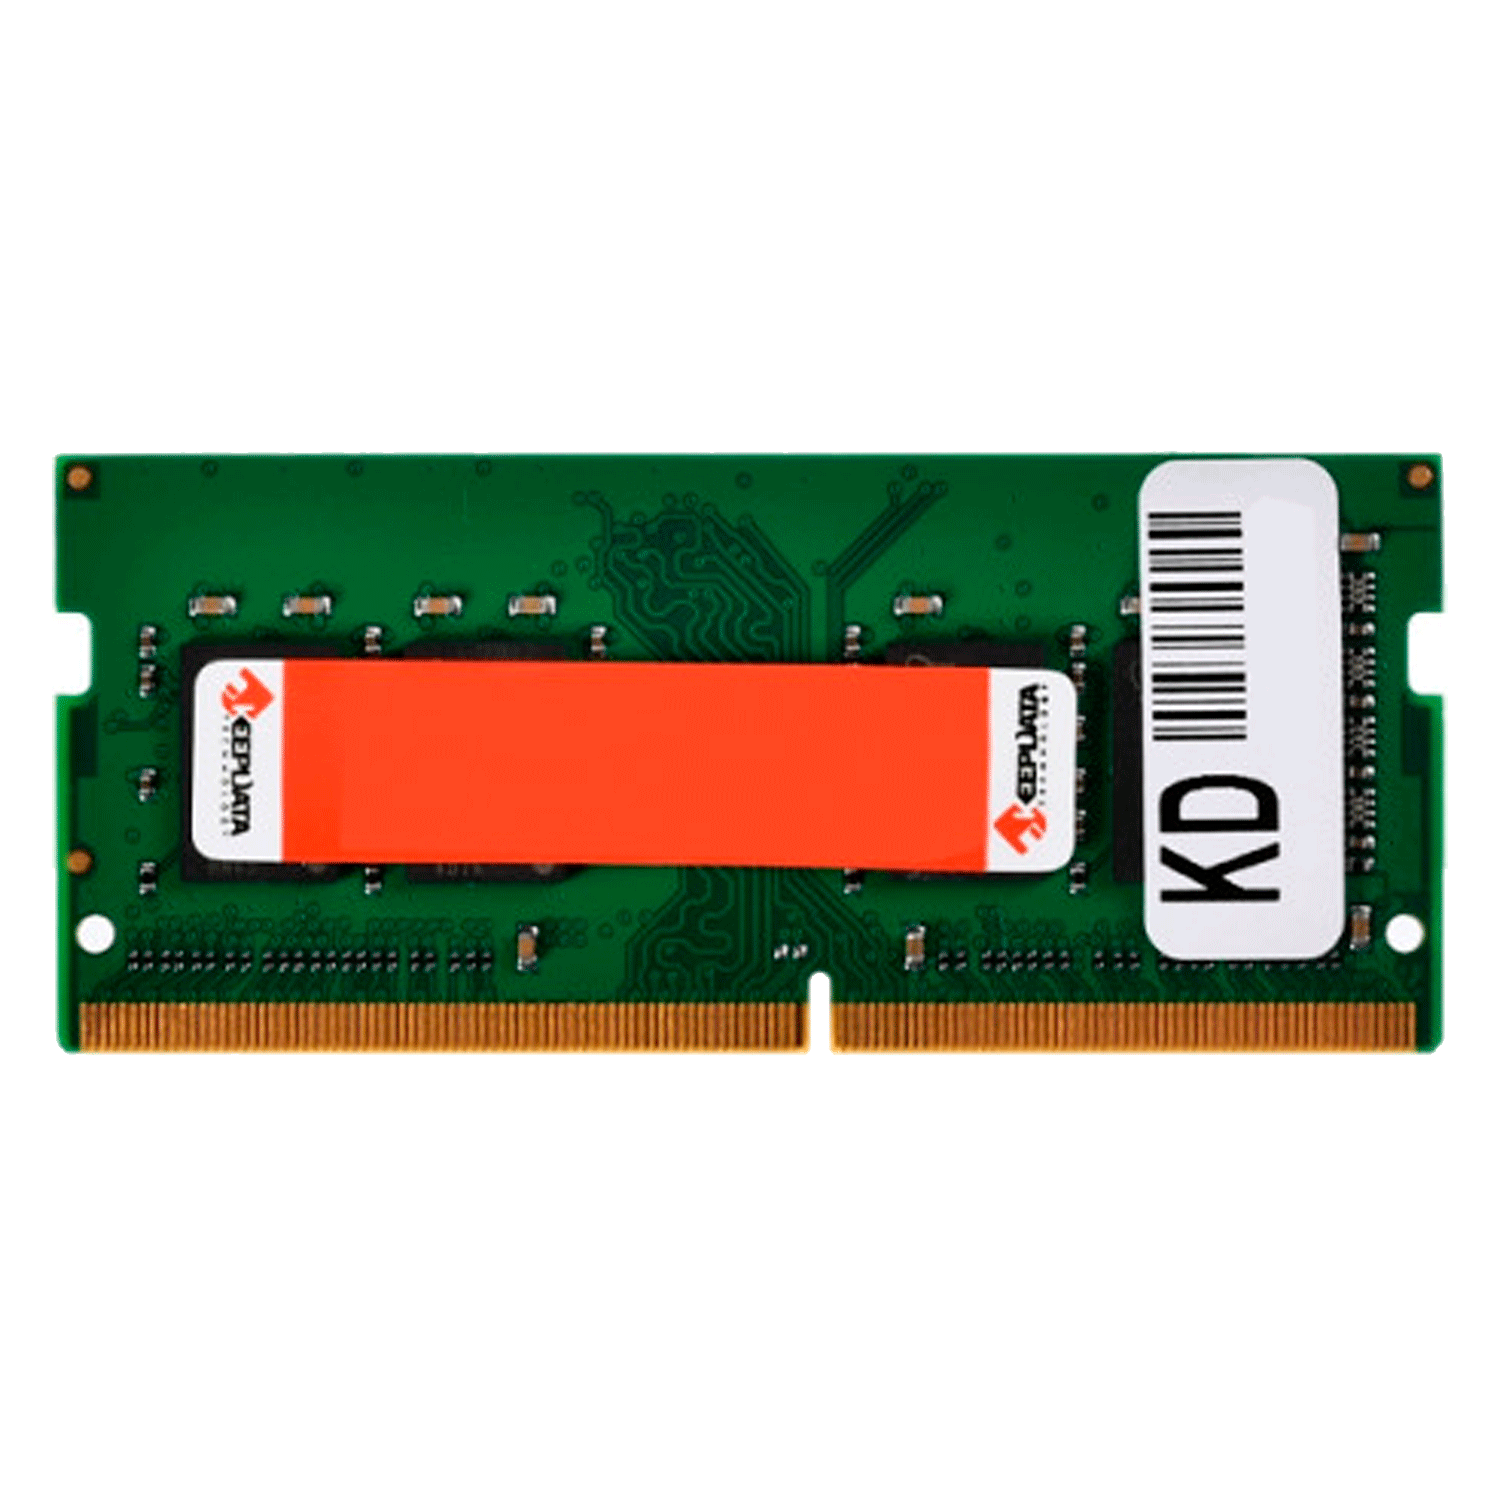 Memória RAM para Notebook Keepdata 4GB/ 3200 MHz/ DDR4 - (KD32S22/4G)